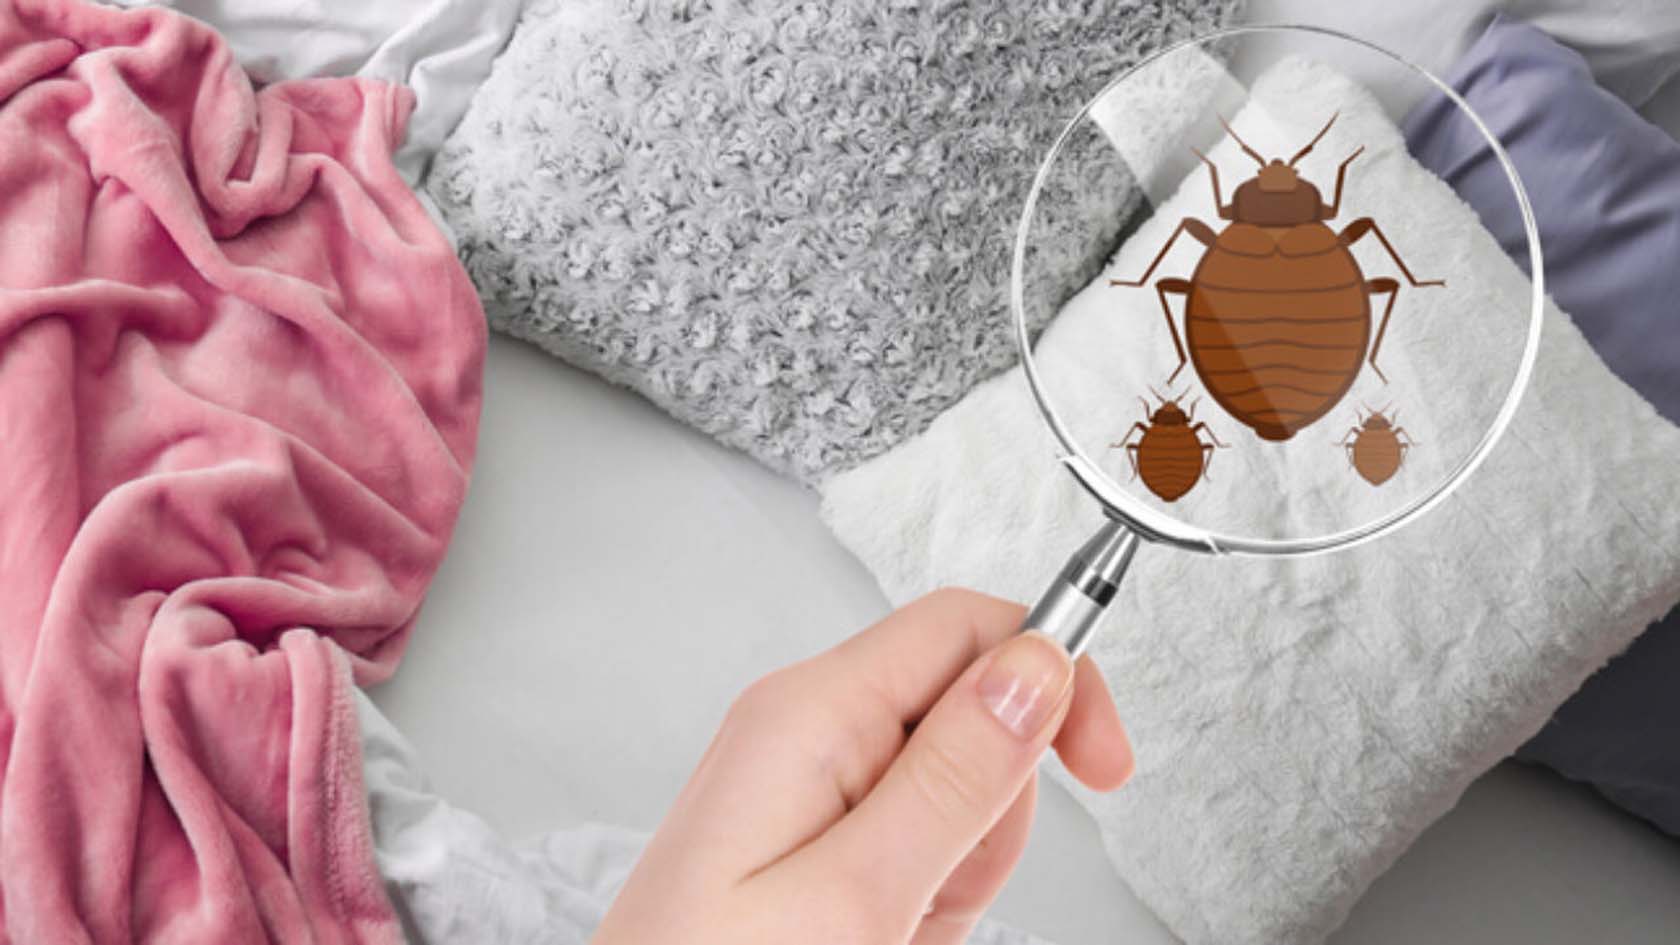 How Do You Detect Bedbugs